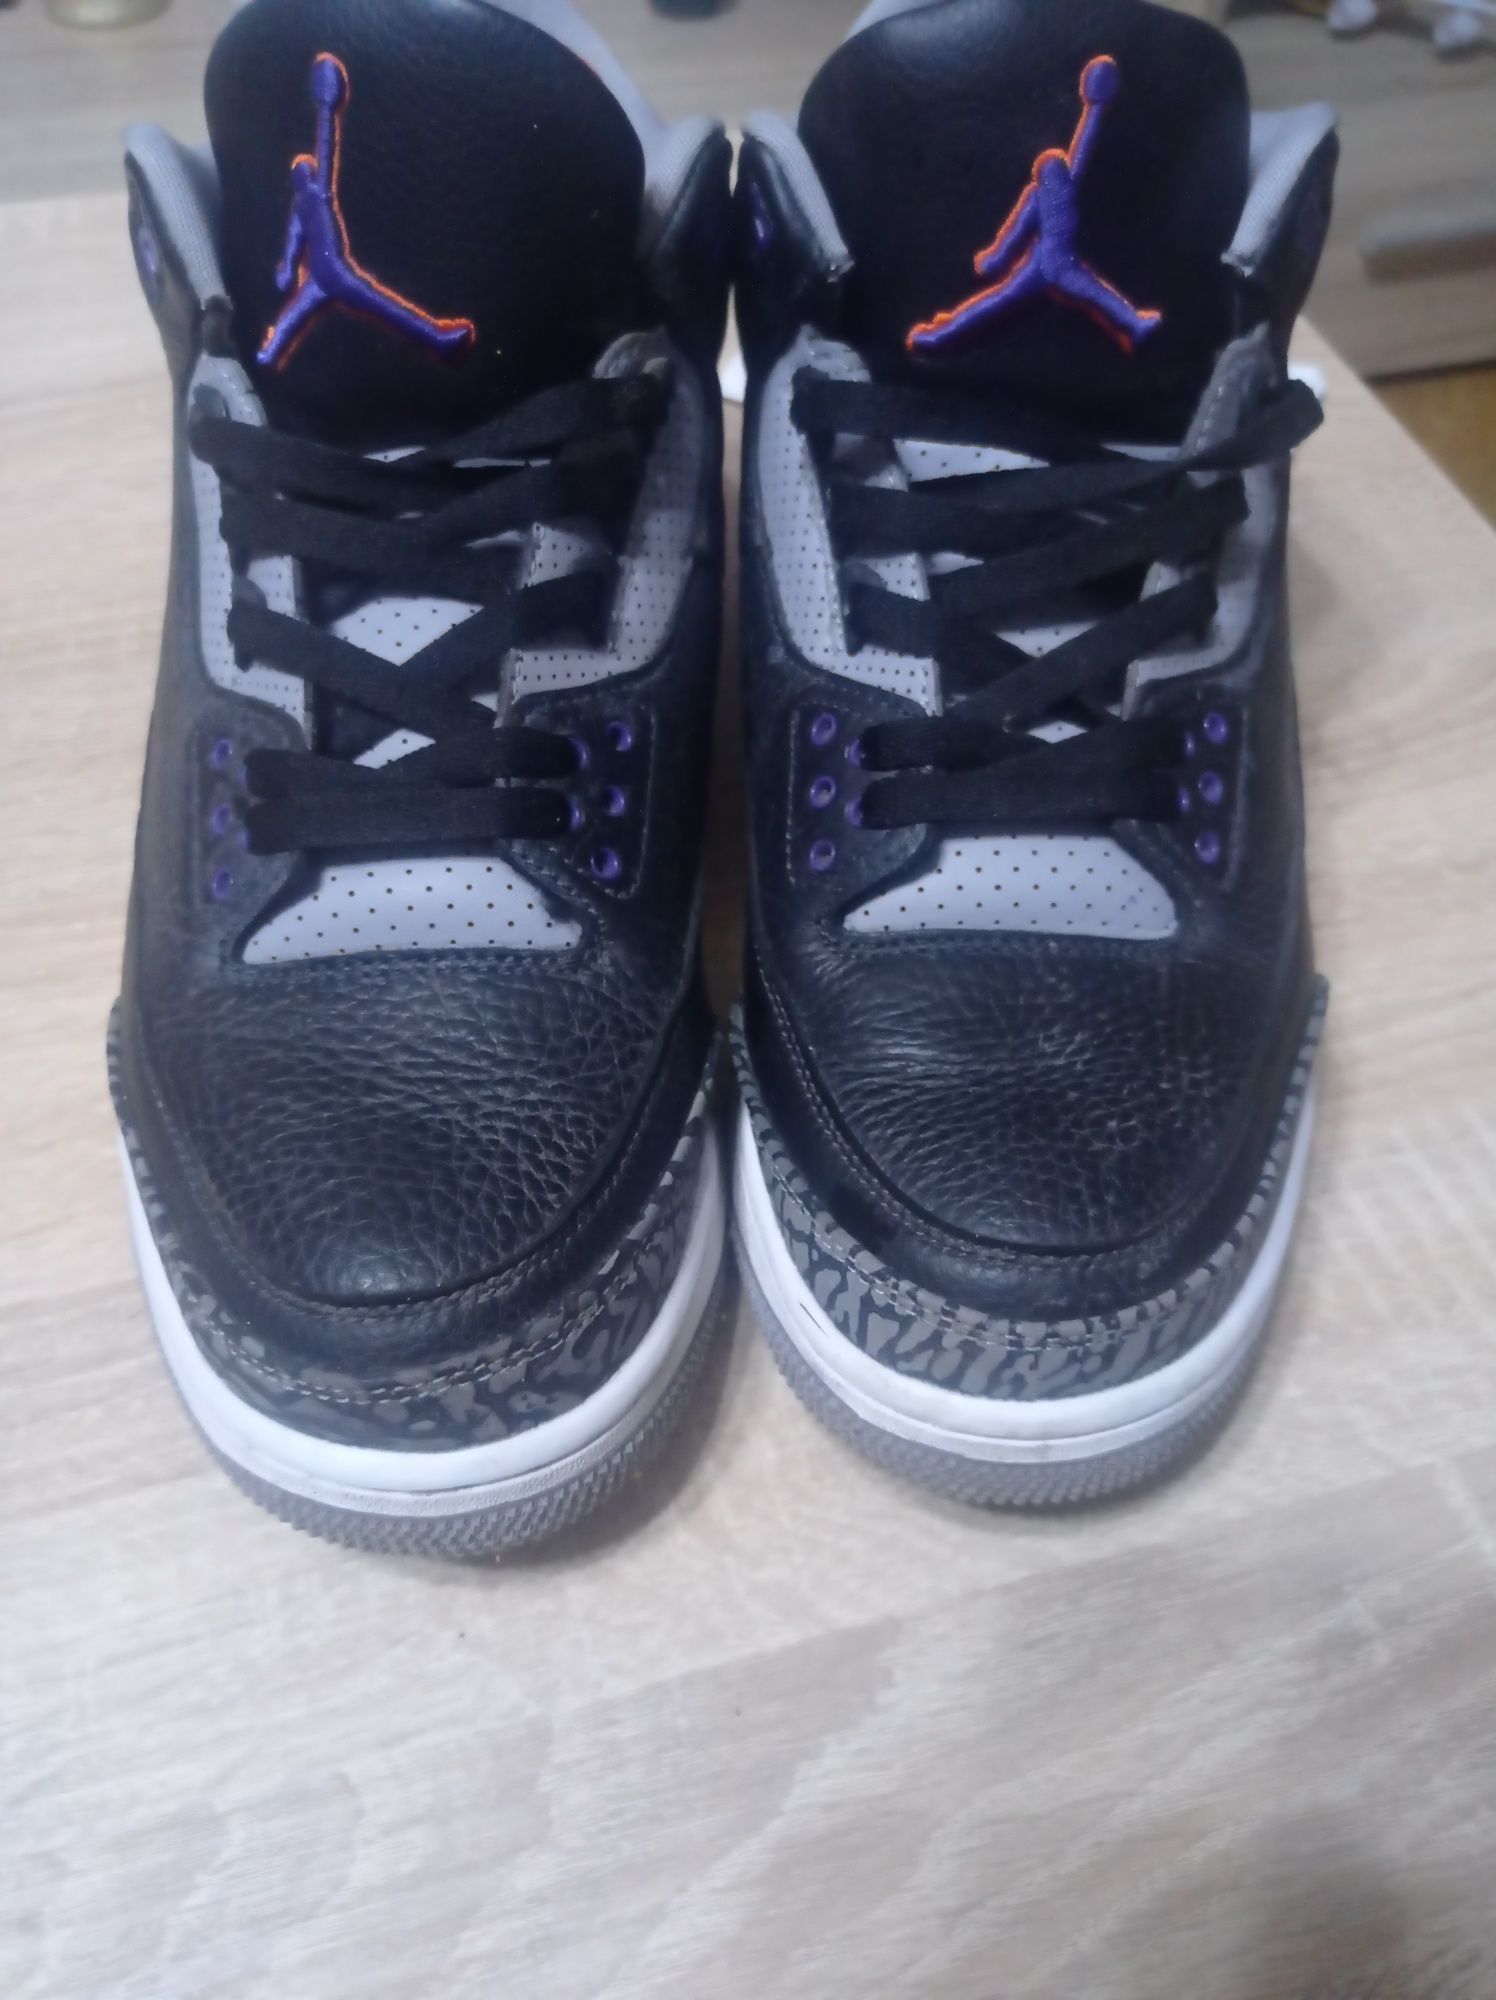 Jordan 3 Court Purple